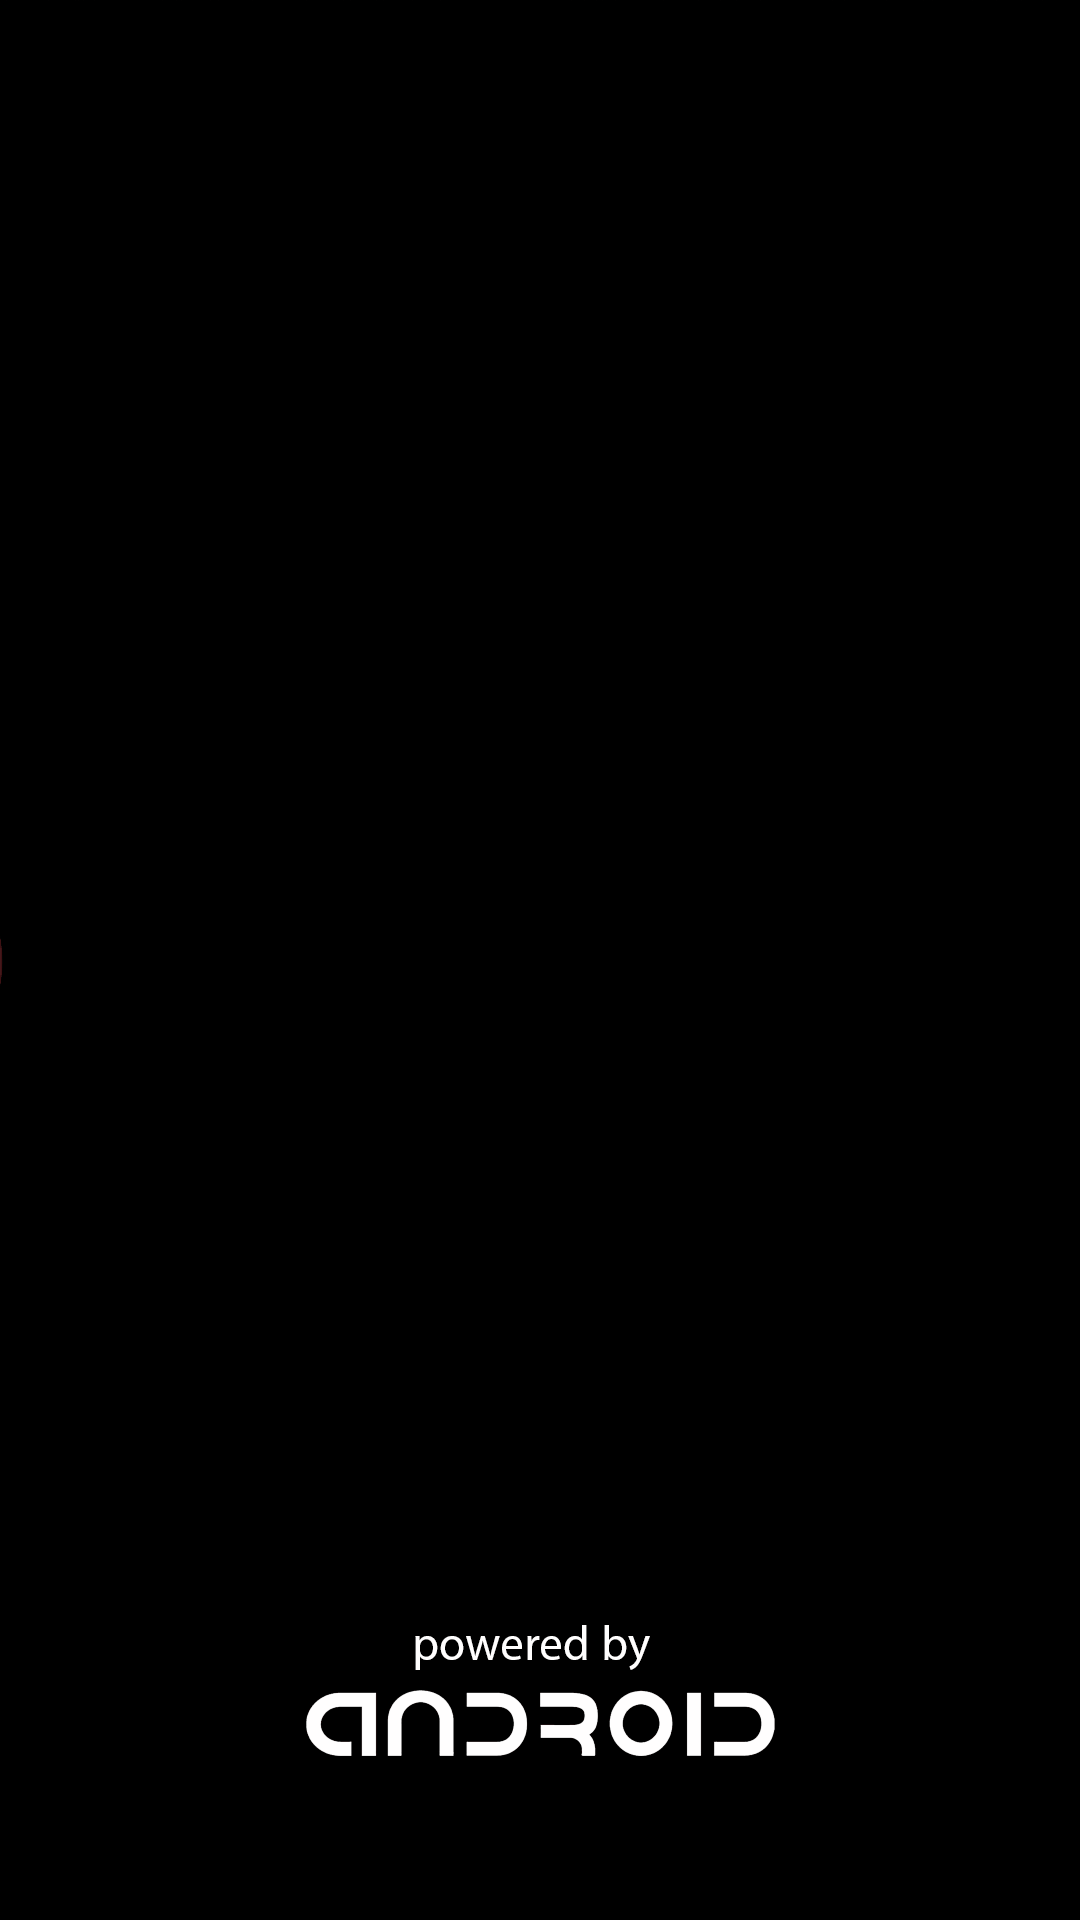 Samsung Galaxy s1 Bootanimation. Анимация загрузки андроид. Логотип андроид на черном фоне. Логотип Powered by Android.